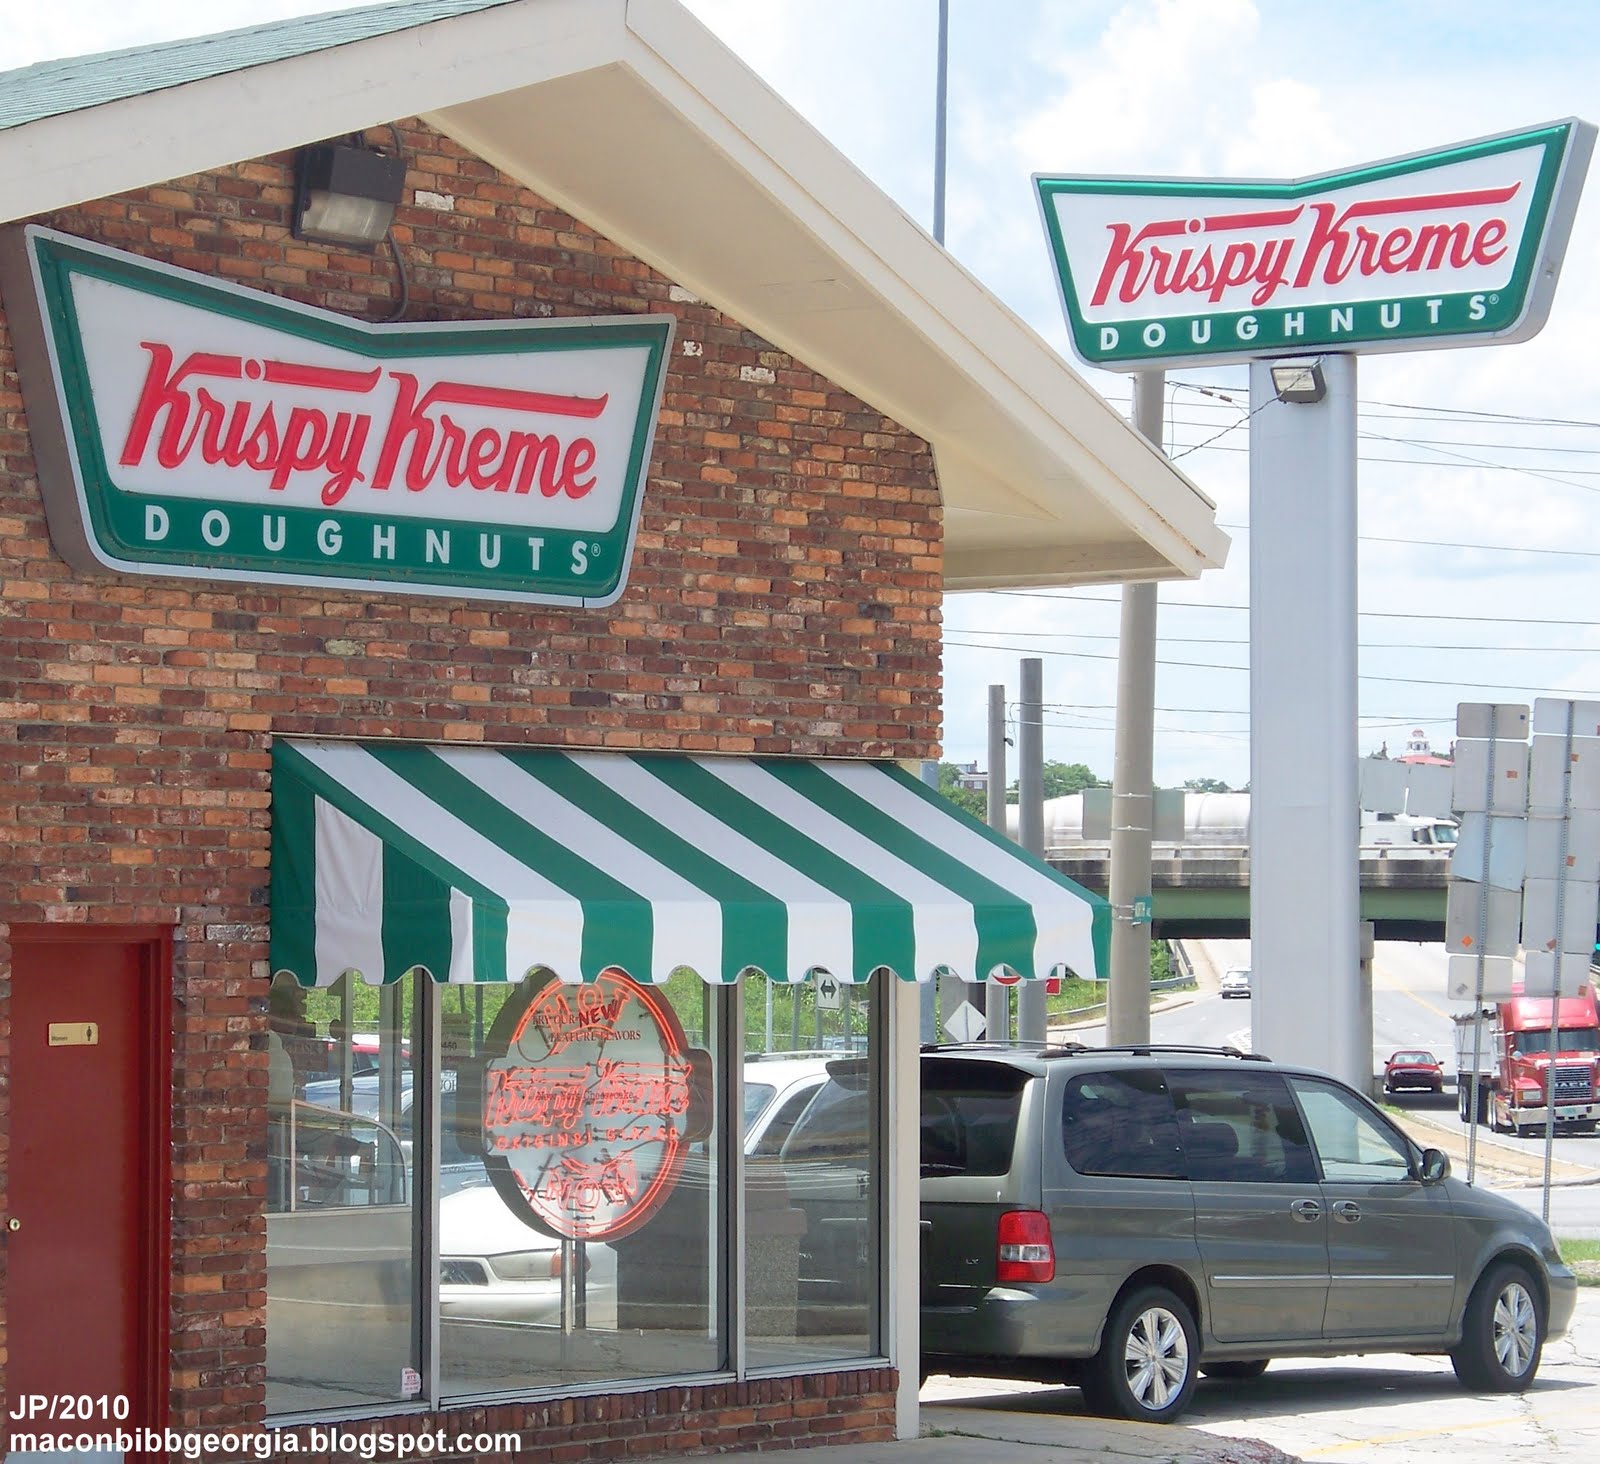 KRISPY+KREME+DOUGHNUTS,+Macon+Georgia+Krispy+Kreme+Donuts+Store,+Macon+GA+Doughnut+Shop..JPG